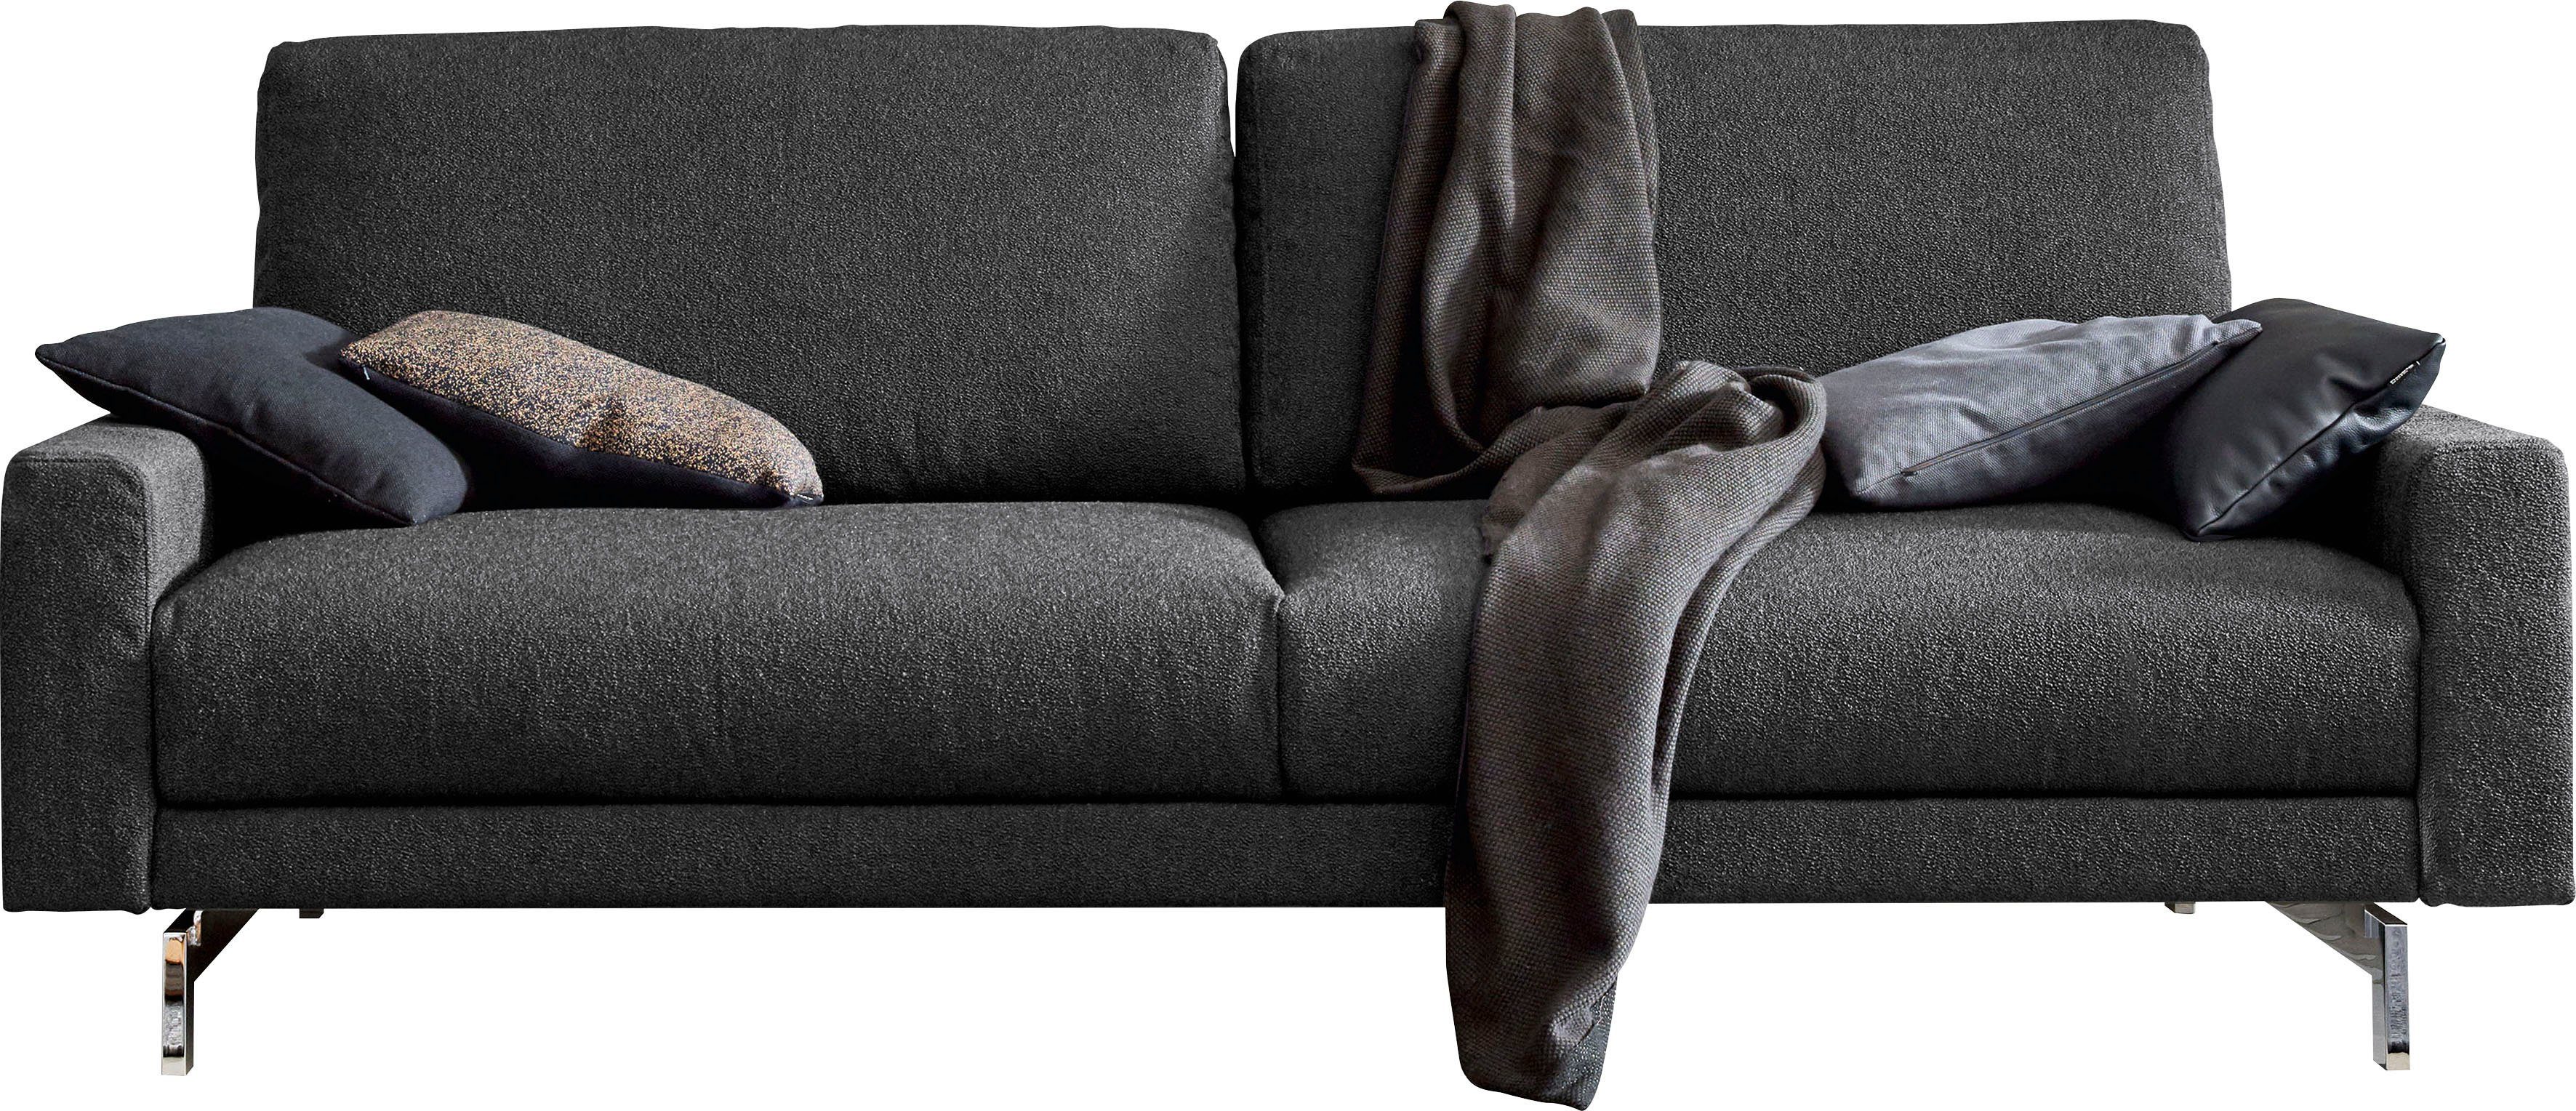 Armlehne chromfarben glänzend, cm Breite 164 hülsta niedrig, 2-Sitzer Fuß hs.450, sofa